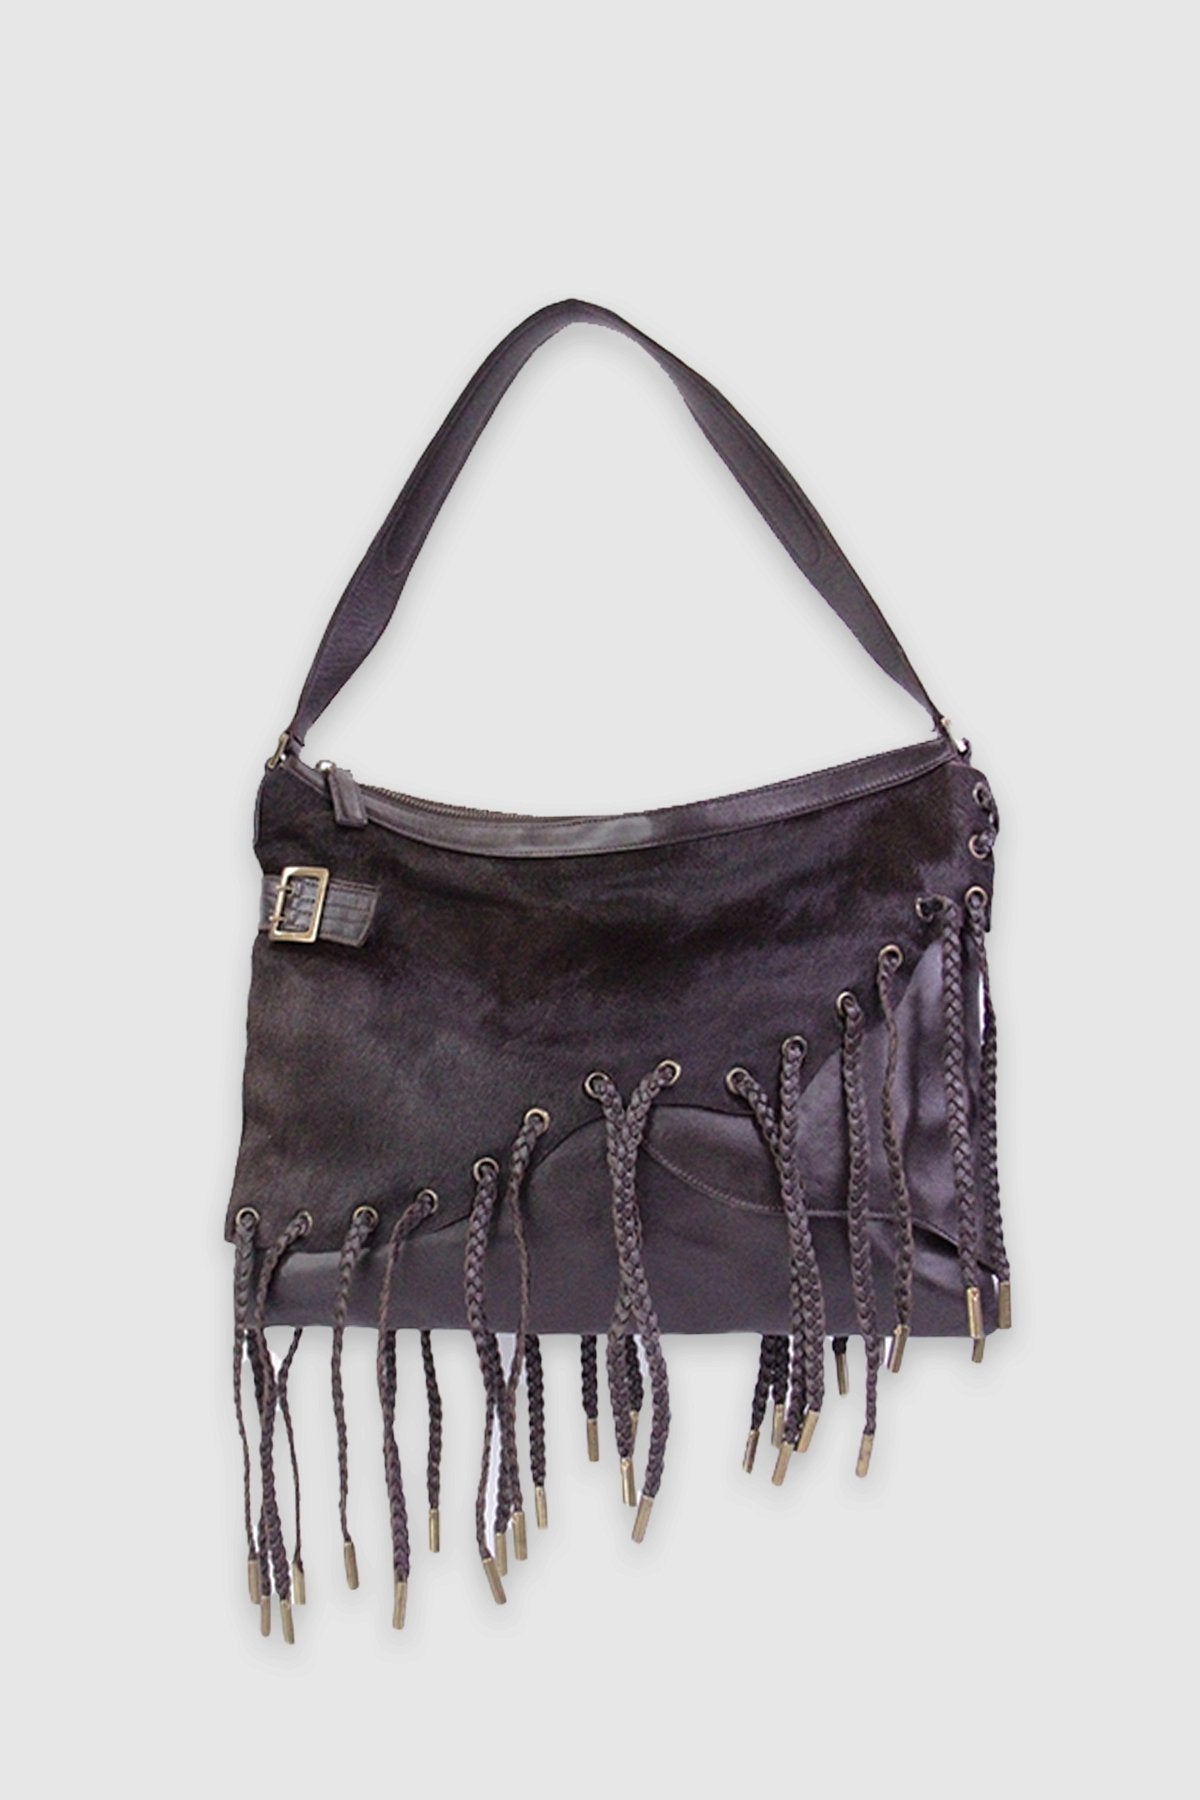 Versace Brown Leather and Cowhide Handbag - shop-olivia.com